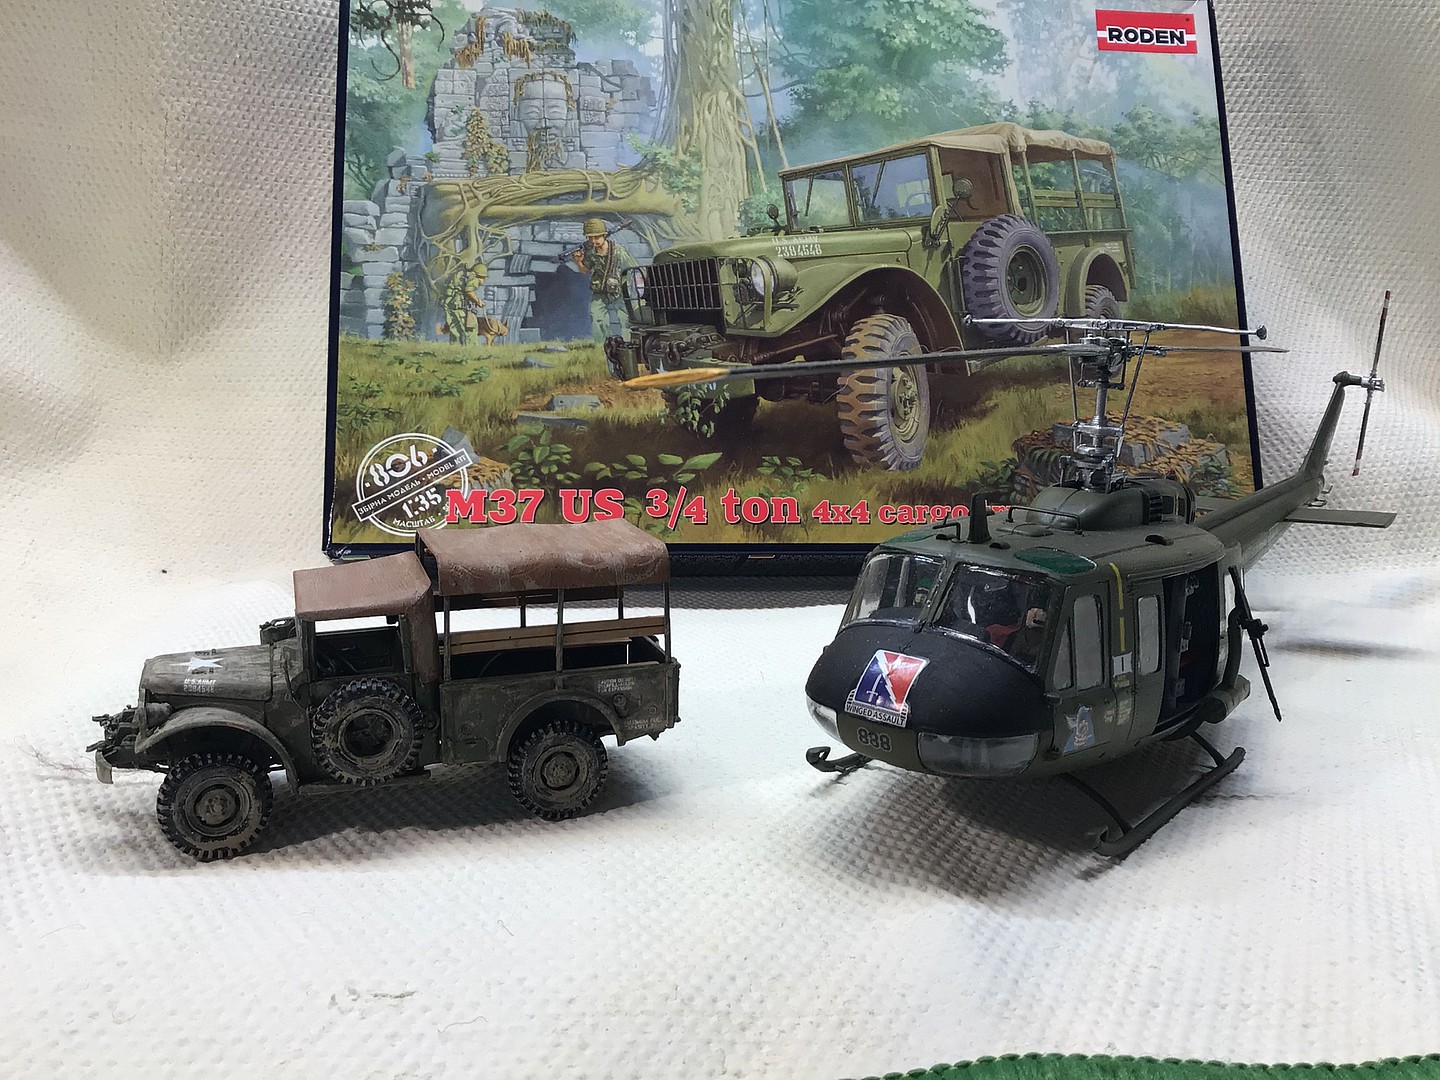 Roden M37 US 3/4 Ton 4x4 Cargo Truck Plastic Model Military